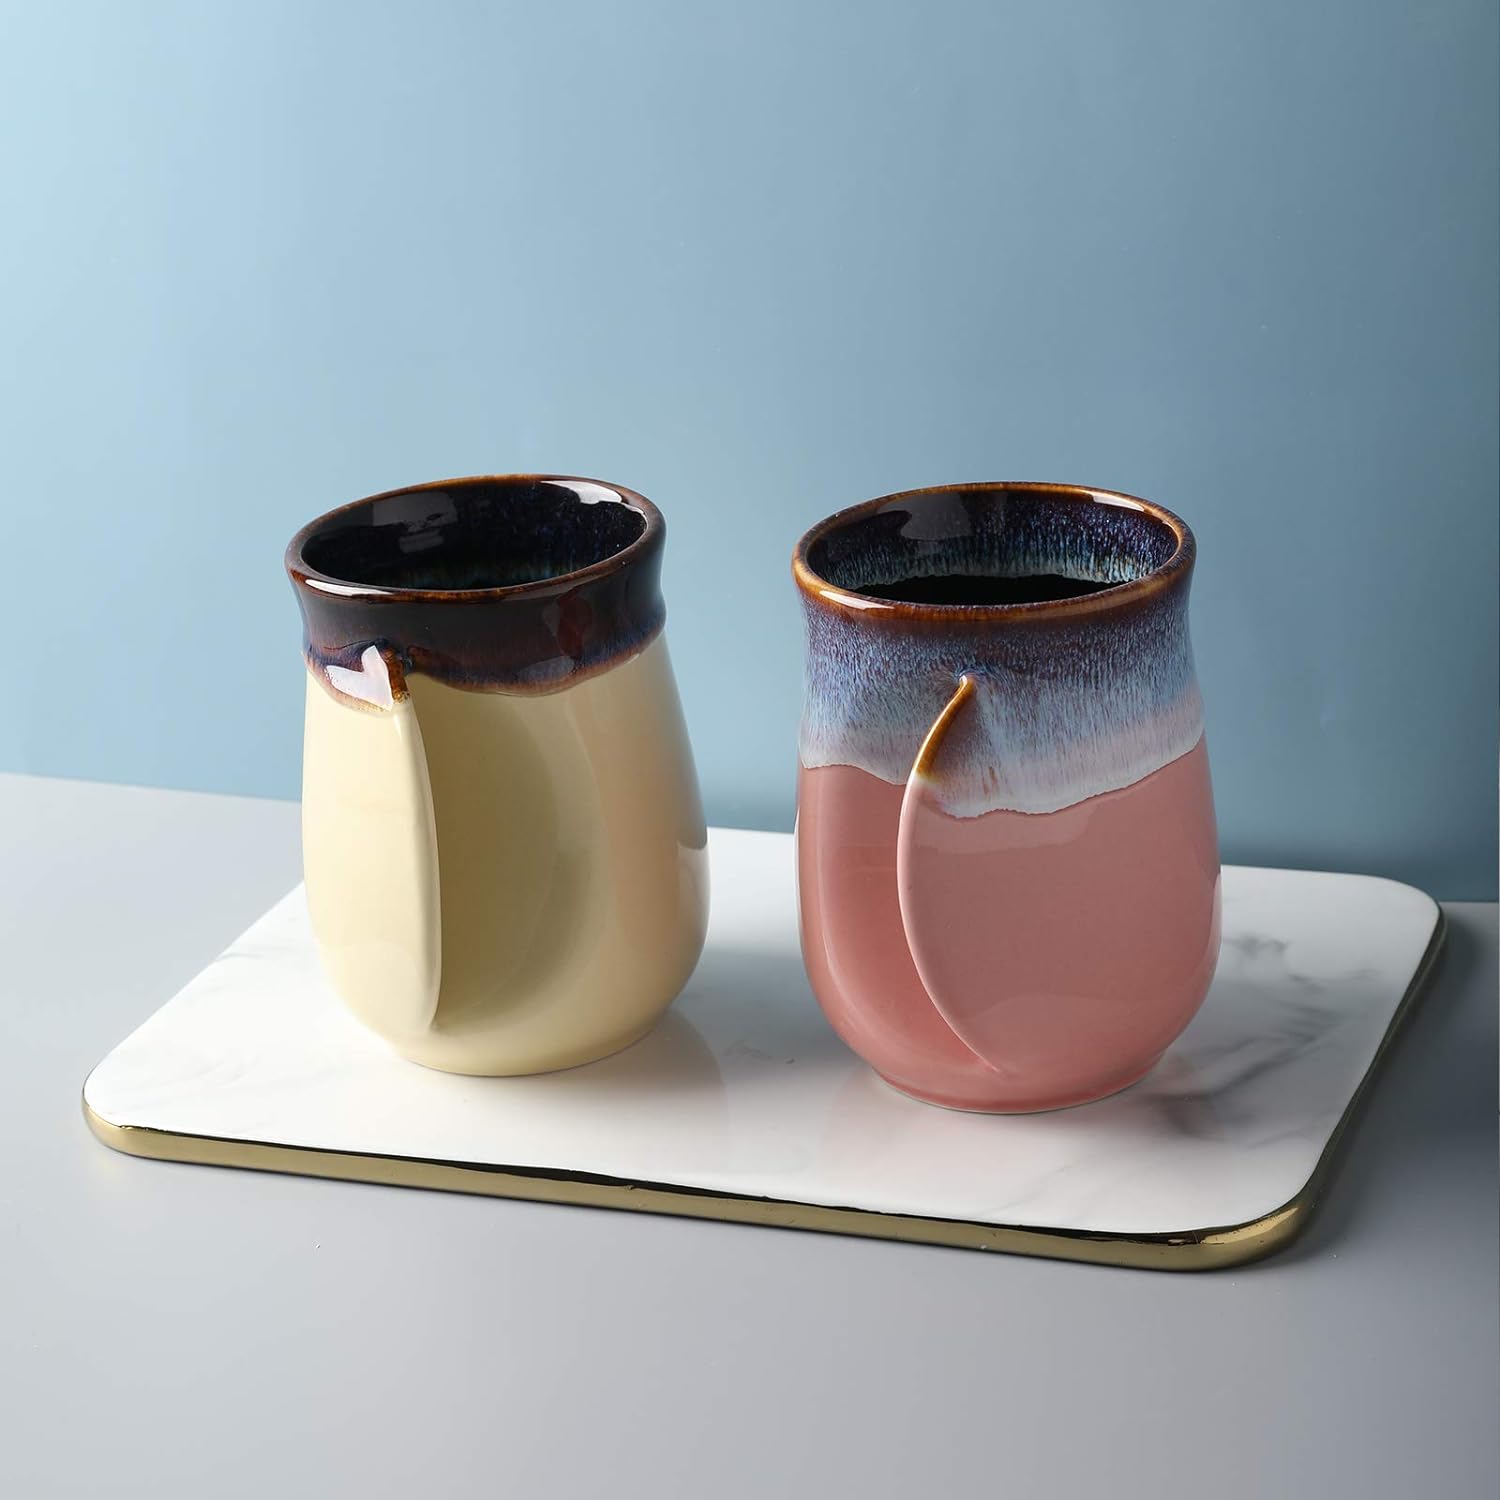 Selamica Porcelain Handwarmer Mug Review